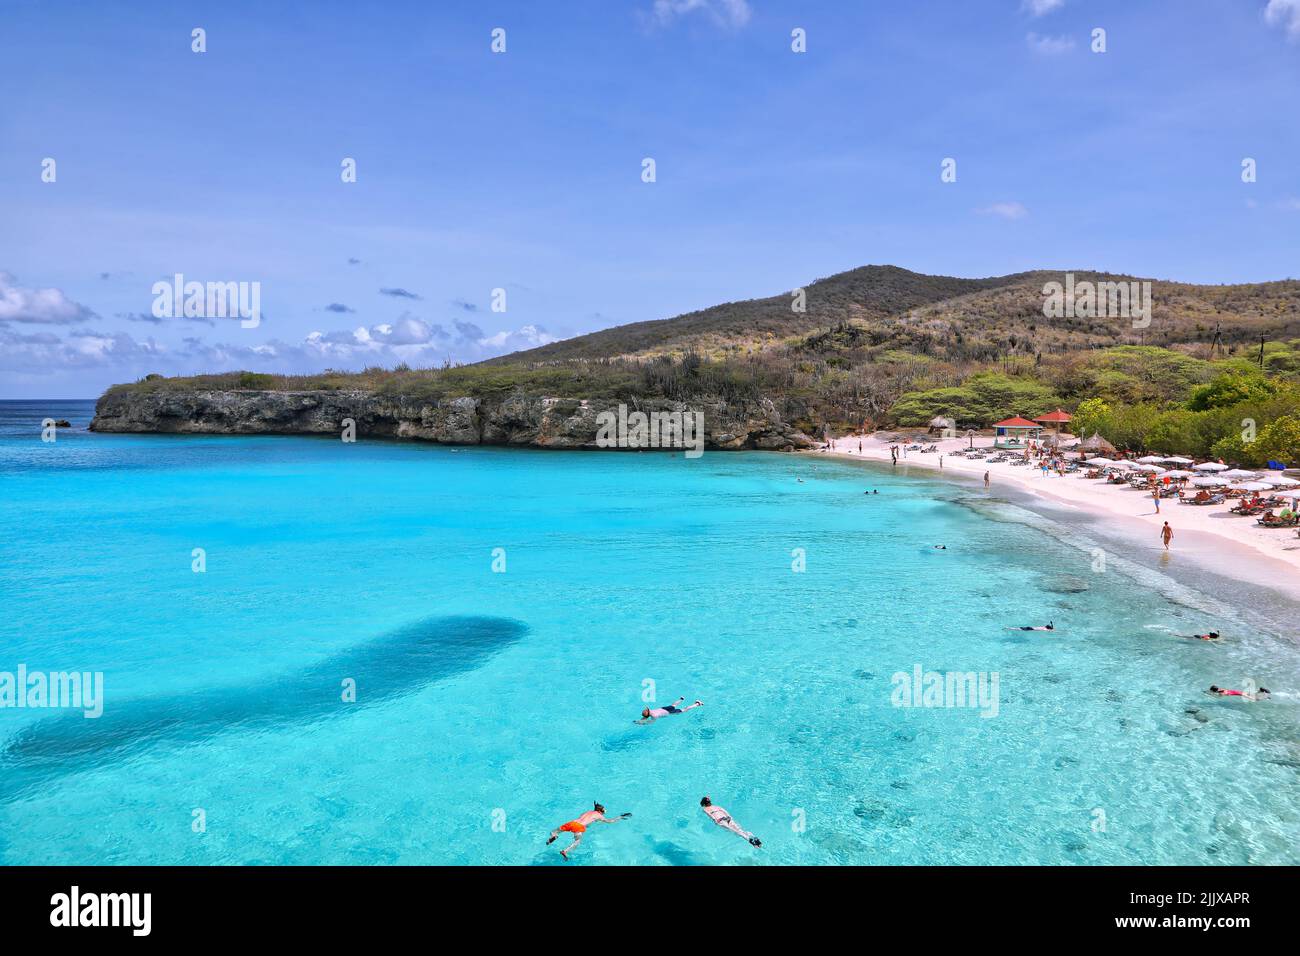 Grote Knip Strand auf Curaçao, Karibik | Grote Knip beach at Curaçao, Caribbean Stock Photo